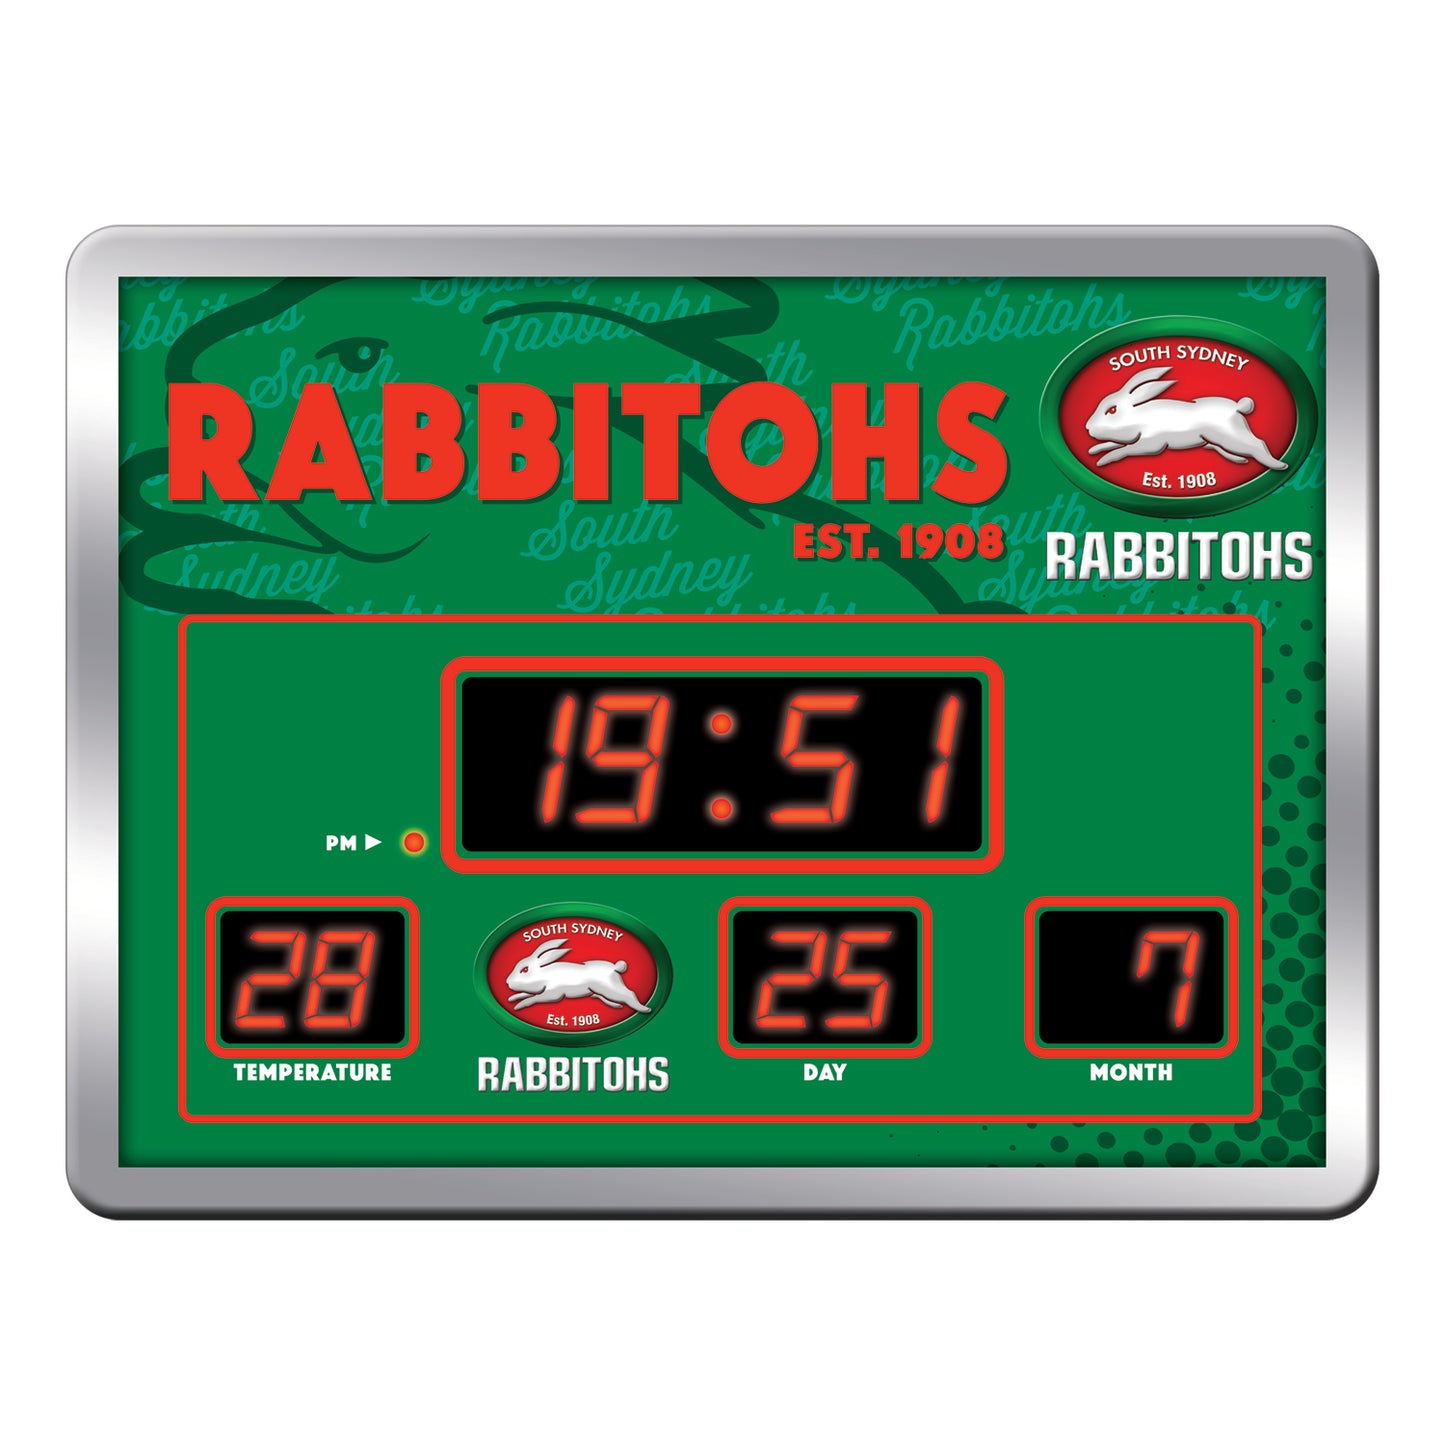 South Sydney Rabbitohs LED Scoreboard Clock